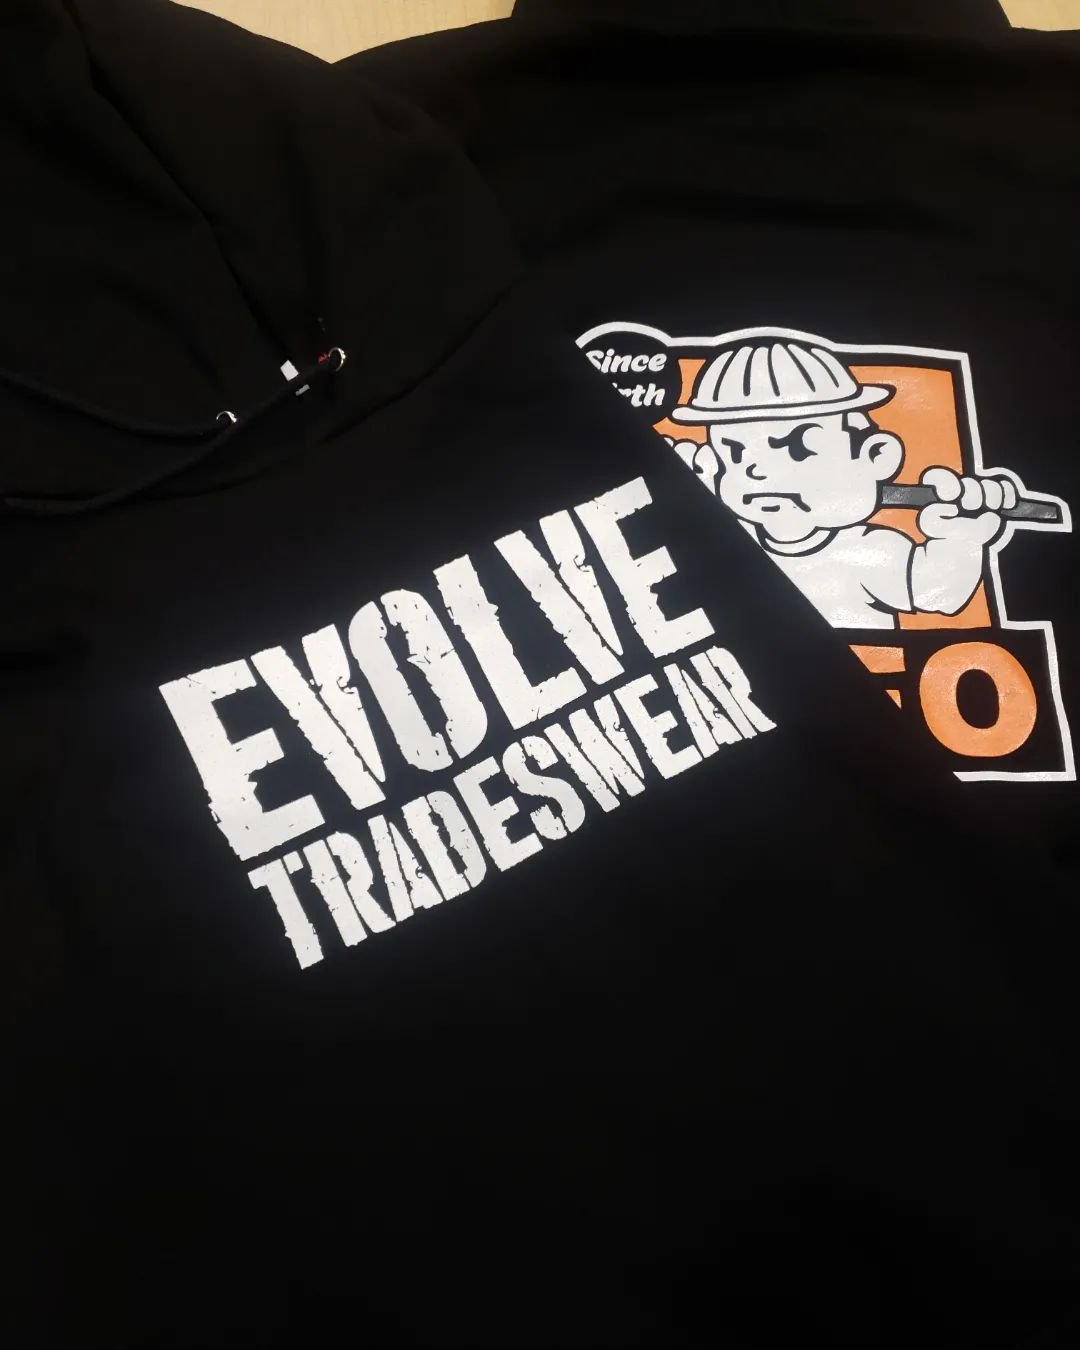 Working on some hoodies for Evolve Tradeswear today! 

#printandplaten #alternativetradeswear #edmontonstickers #screenprinters #screenprinting #tradeswear #evolvetradeswear #yeg #yegbusiness #albertabusiness #supportlocal #indigenousbusiness